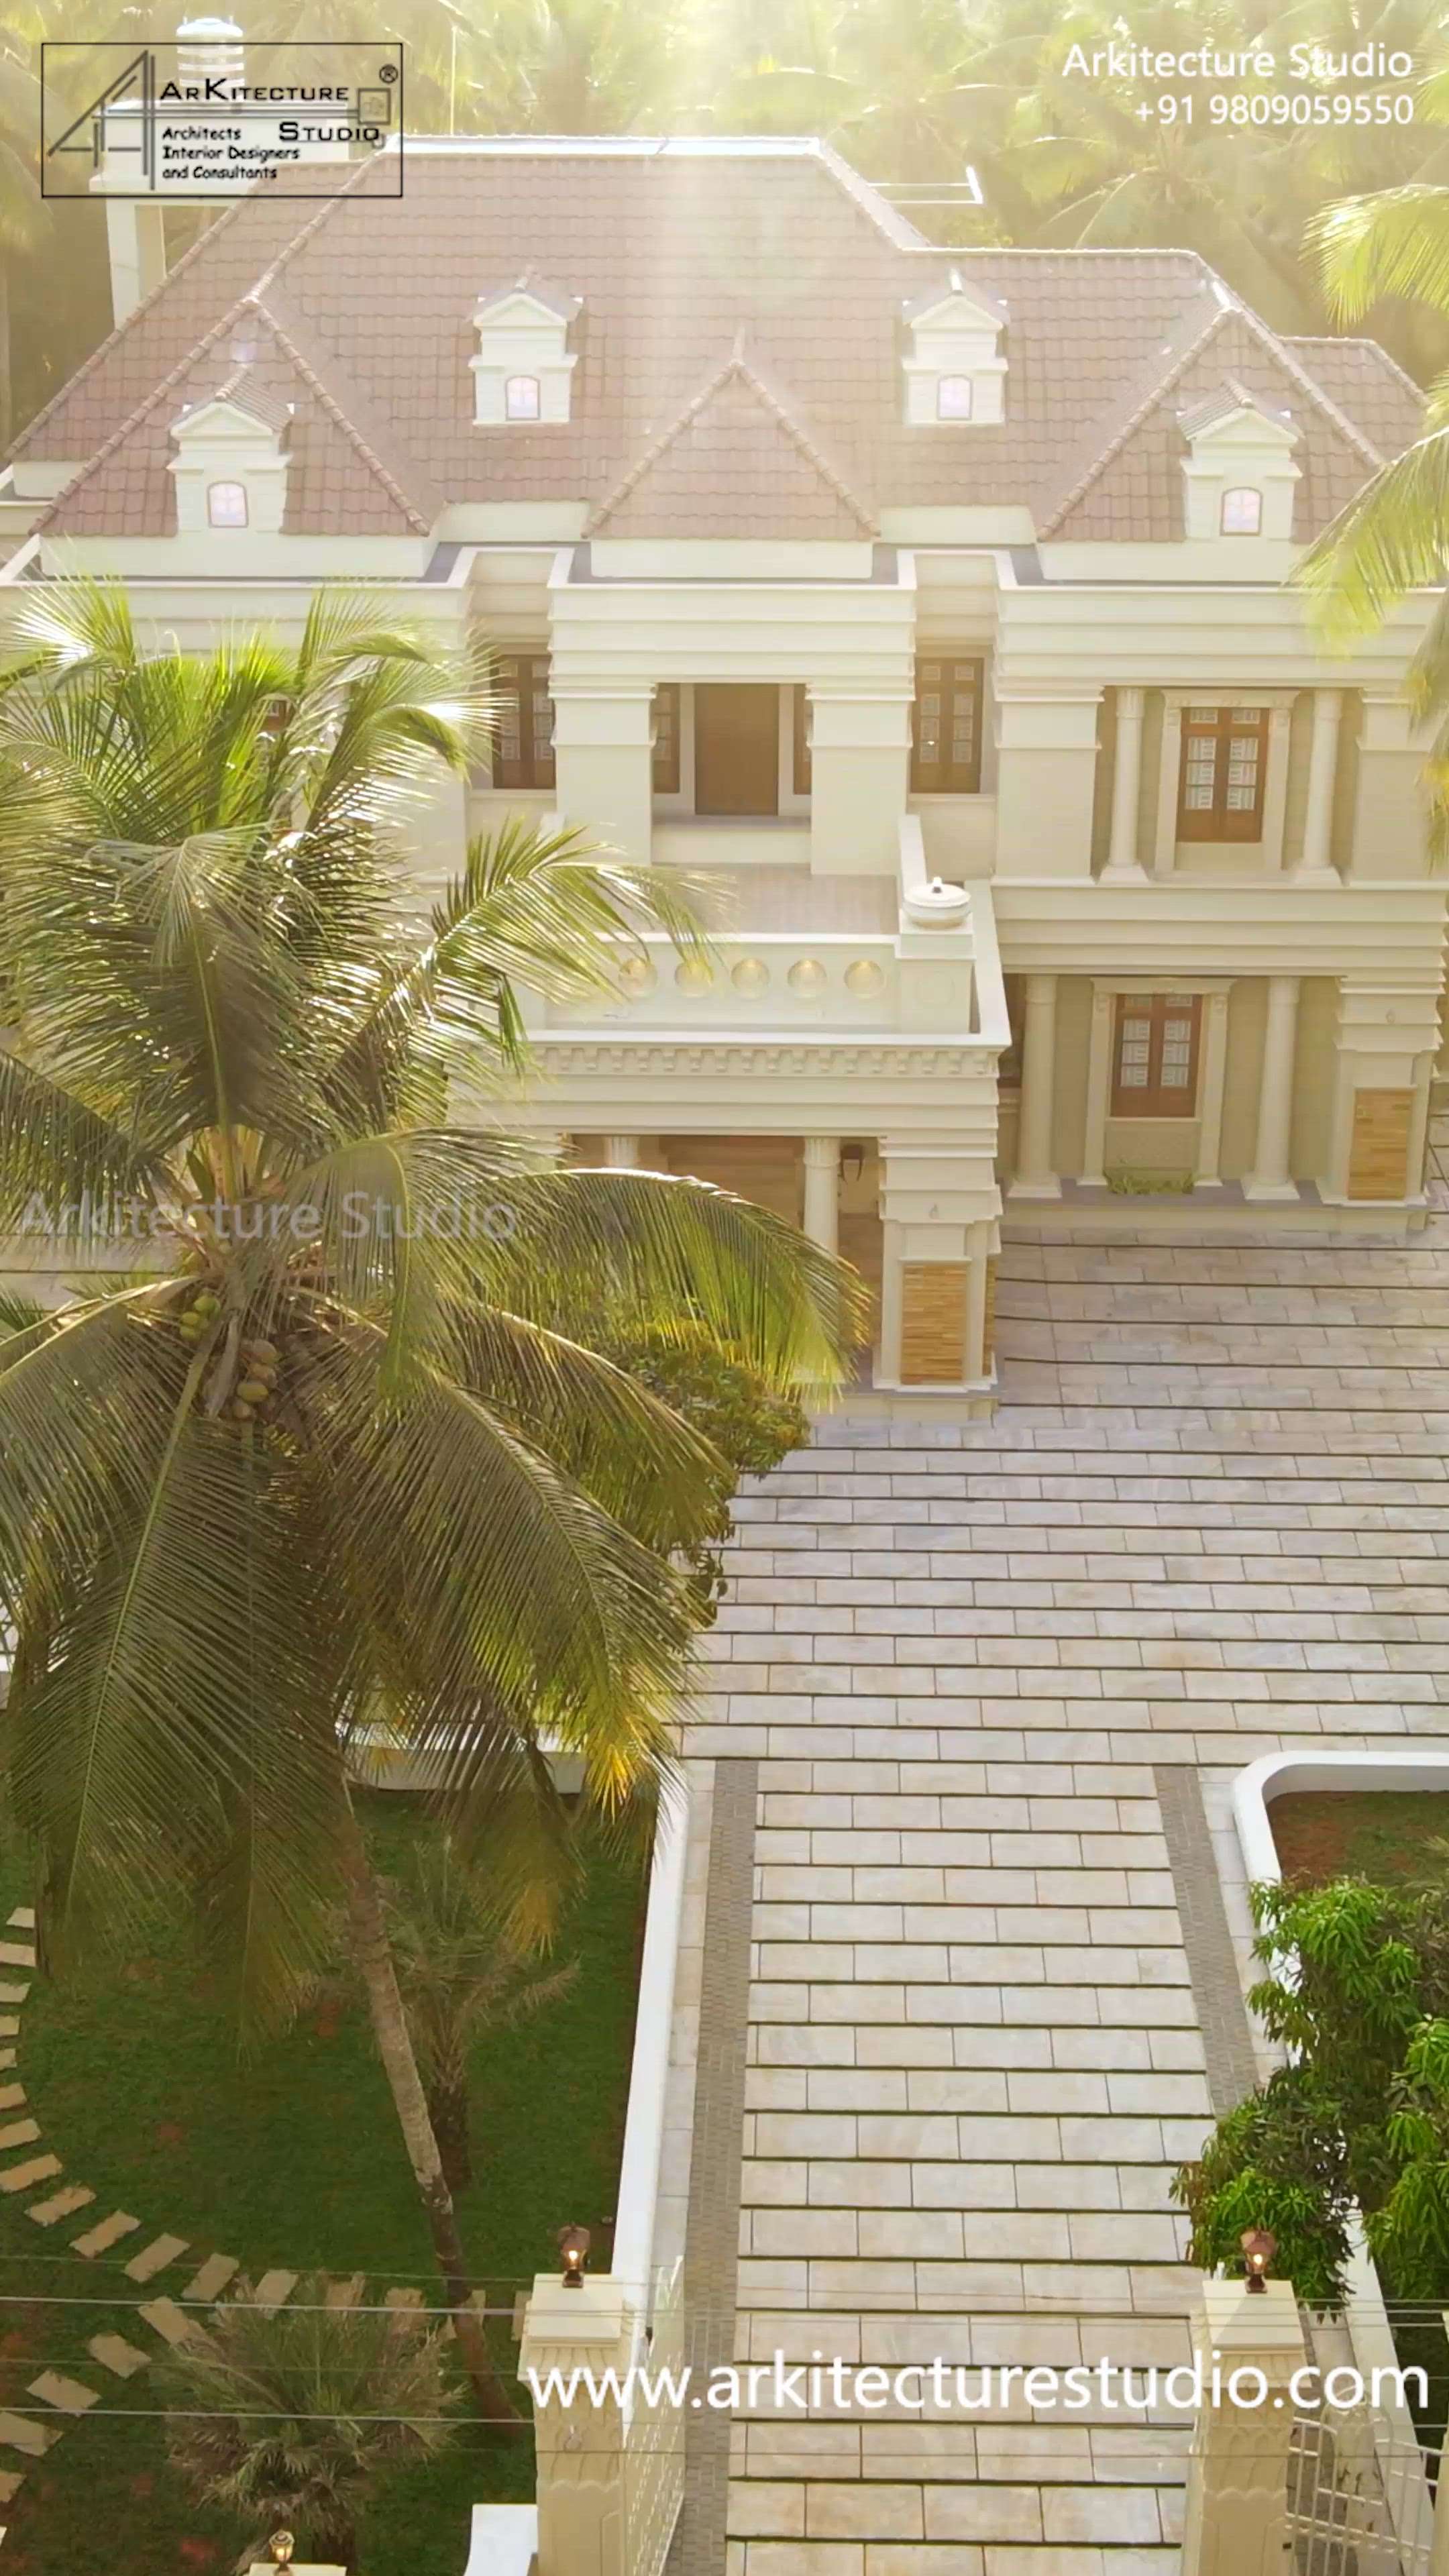 luxury colonial exterior house
Kerala architecture
www.arkitecturestudio.com
 #dreamhouse
 #kerala
#colonialhouse 
 #classicatyle
 #villadesign 
#arkitecturestudio